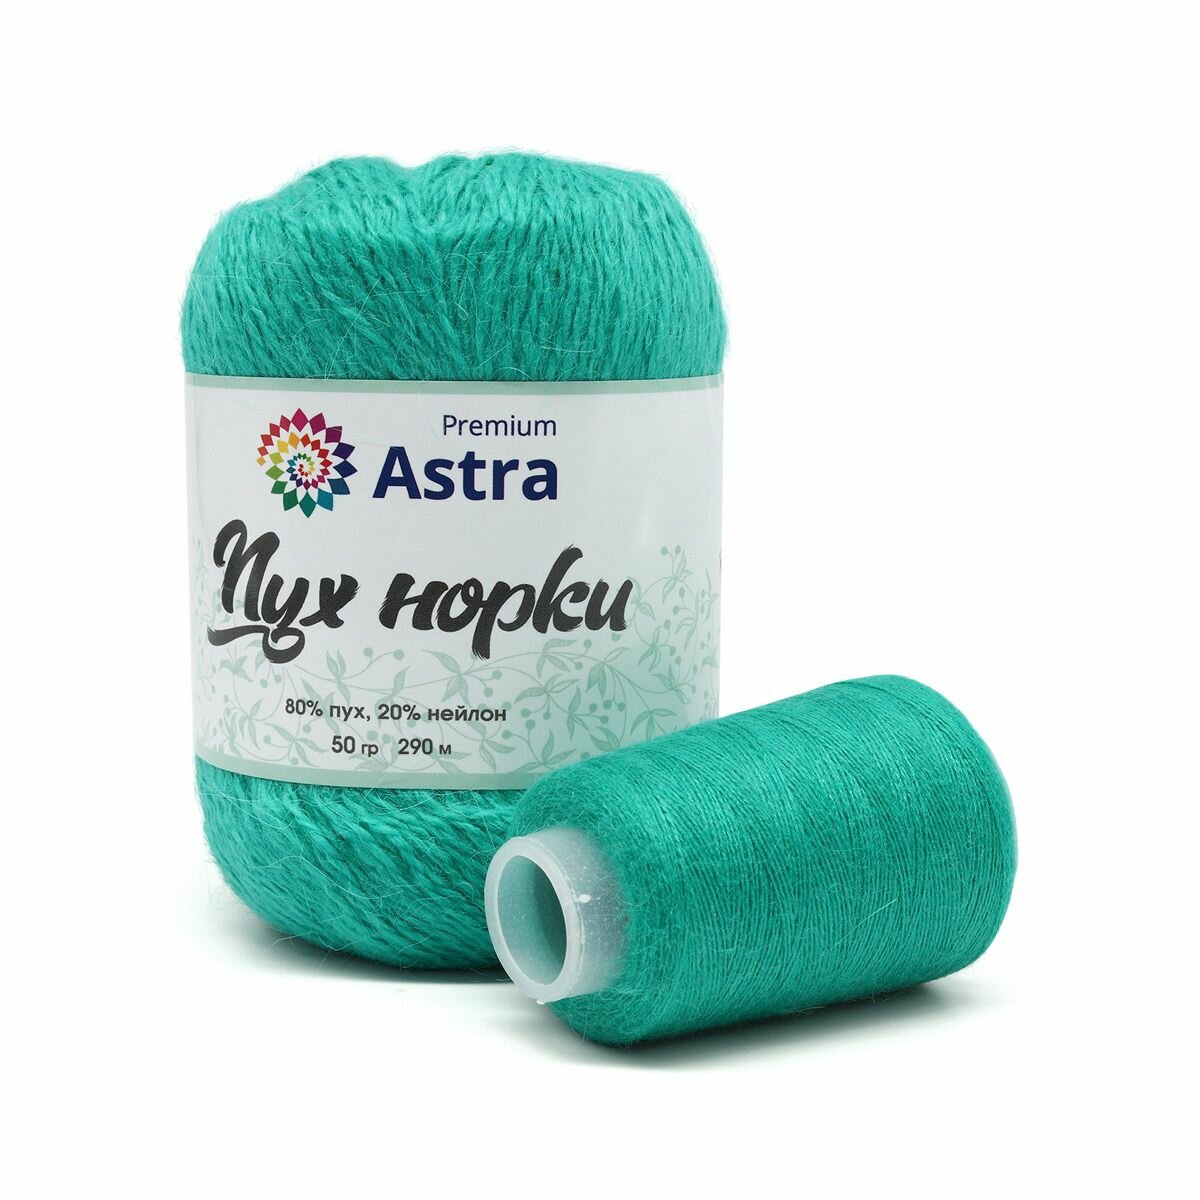 Пряжа для вязания Astra Premium 'Пух норки' (Mink yarn), 50г, 290м (+- 5%) (80% пух, 20% нейлон) (+ нить 20 г) (075 зеленая бирюза)